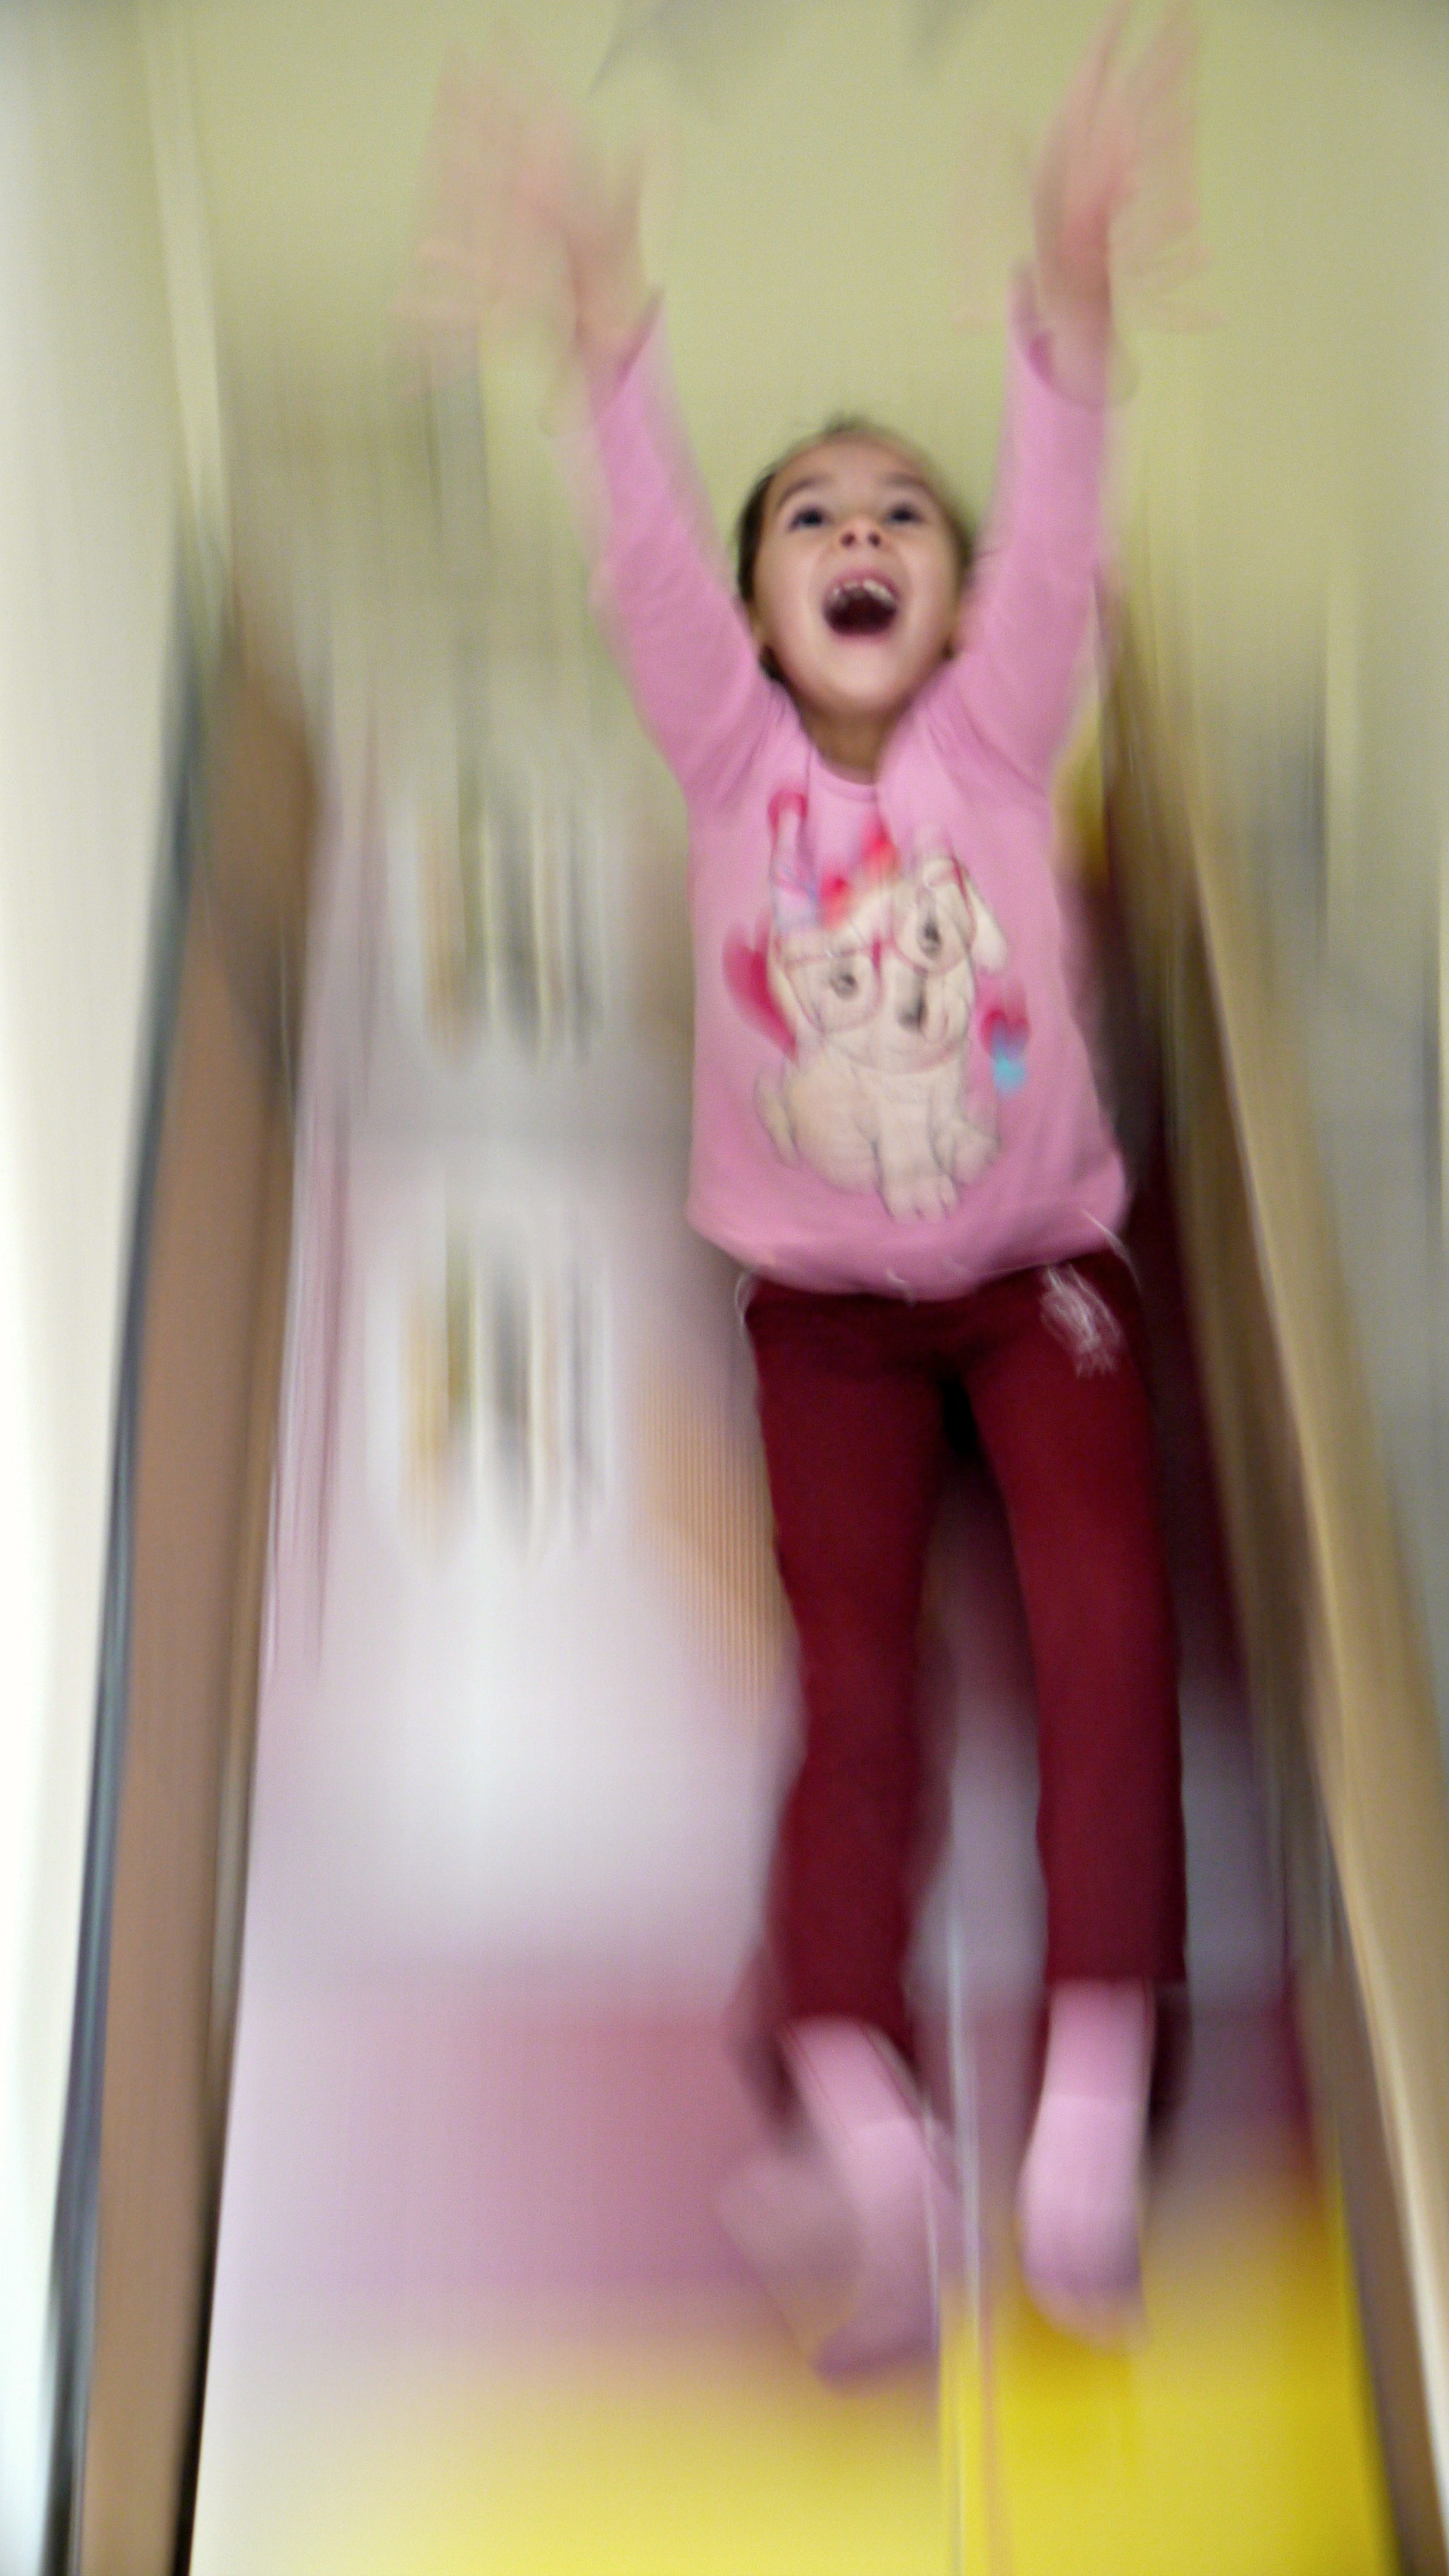 Young girl sliding on a cardboard slide